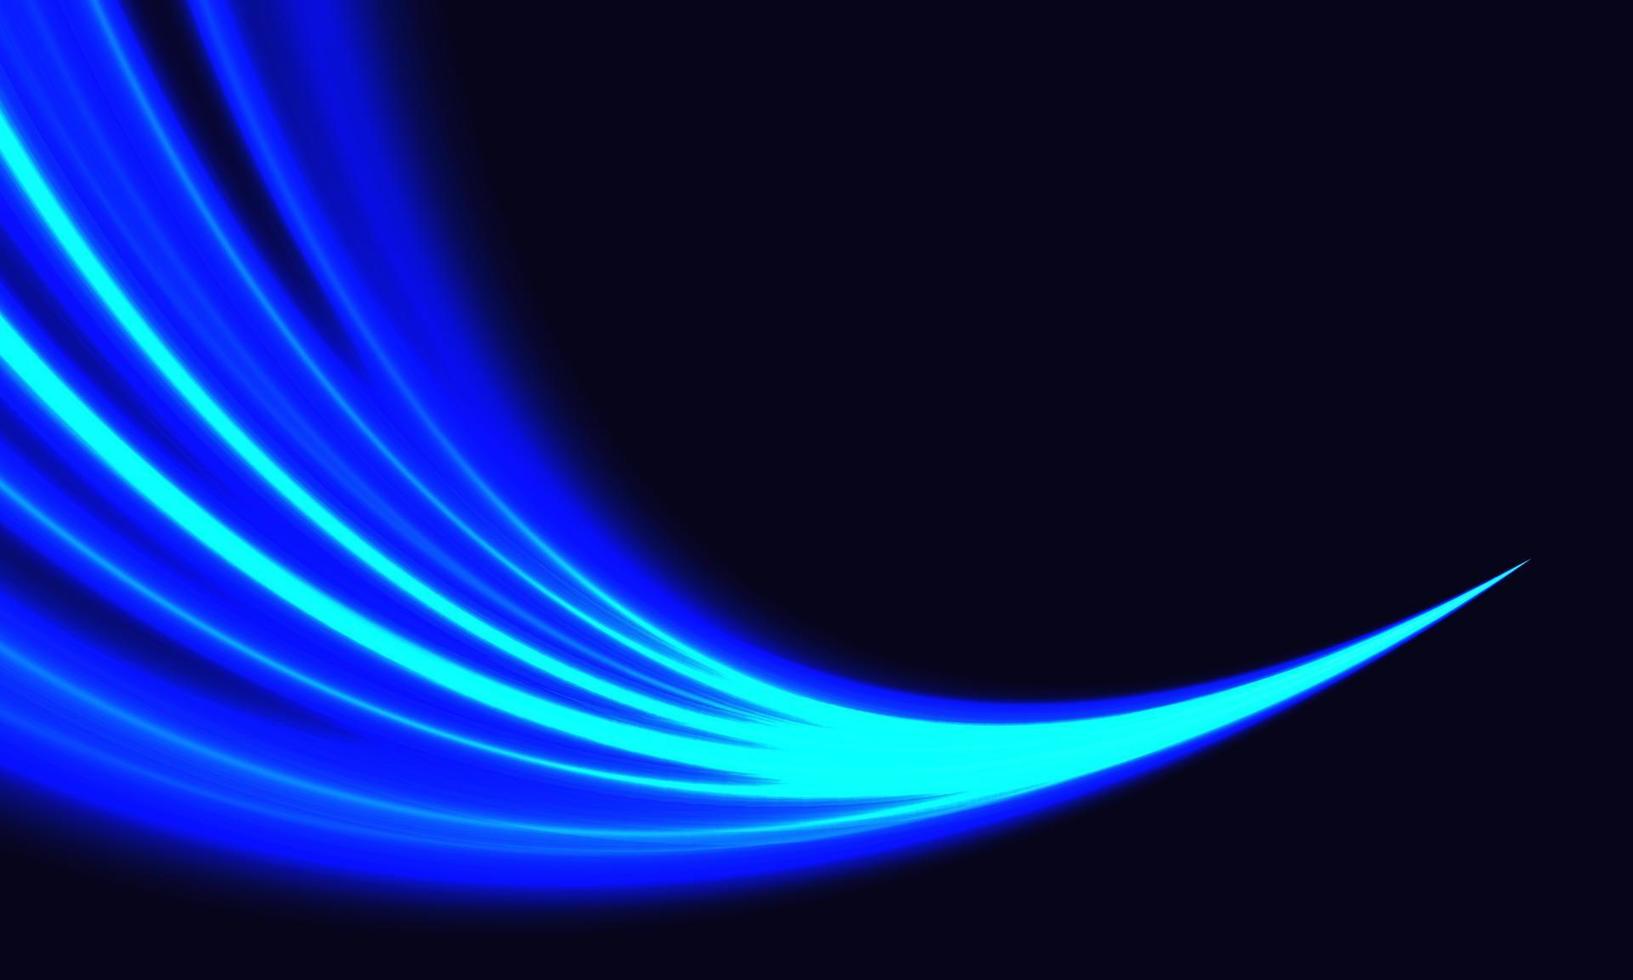 Abstrac blue light blue speed curve dynamic on dark luxury design creative background vector